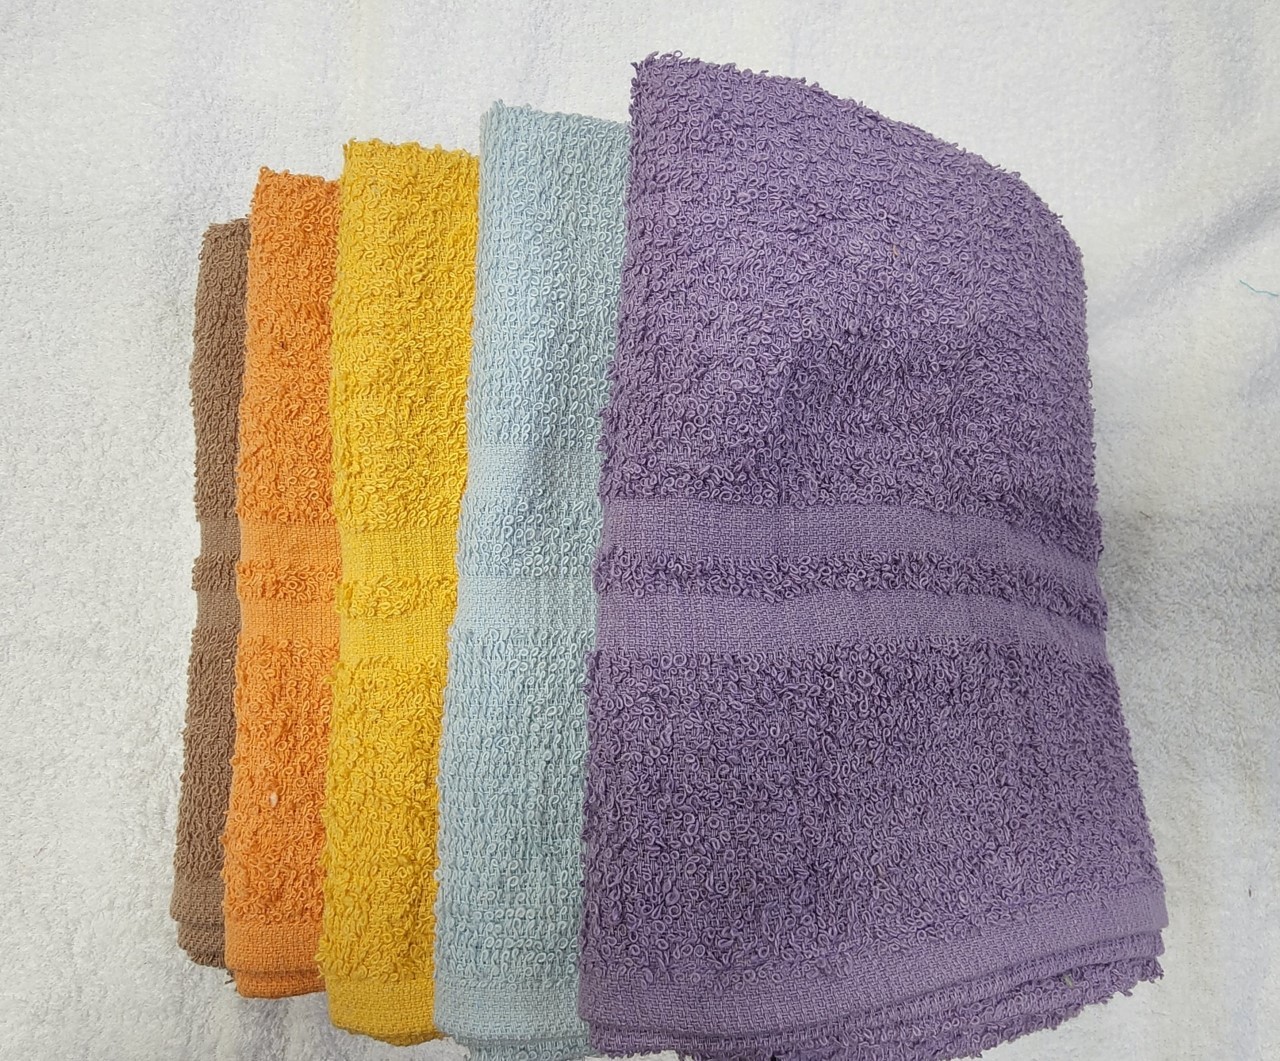 20X40 Wholesale Economy Bath Towels In Bulk